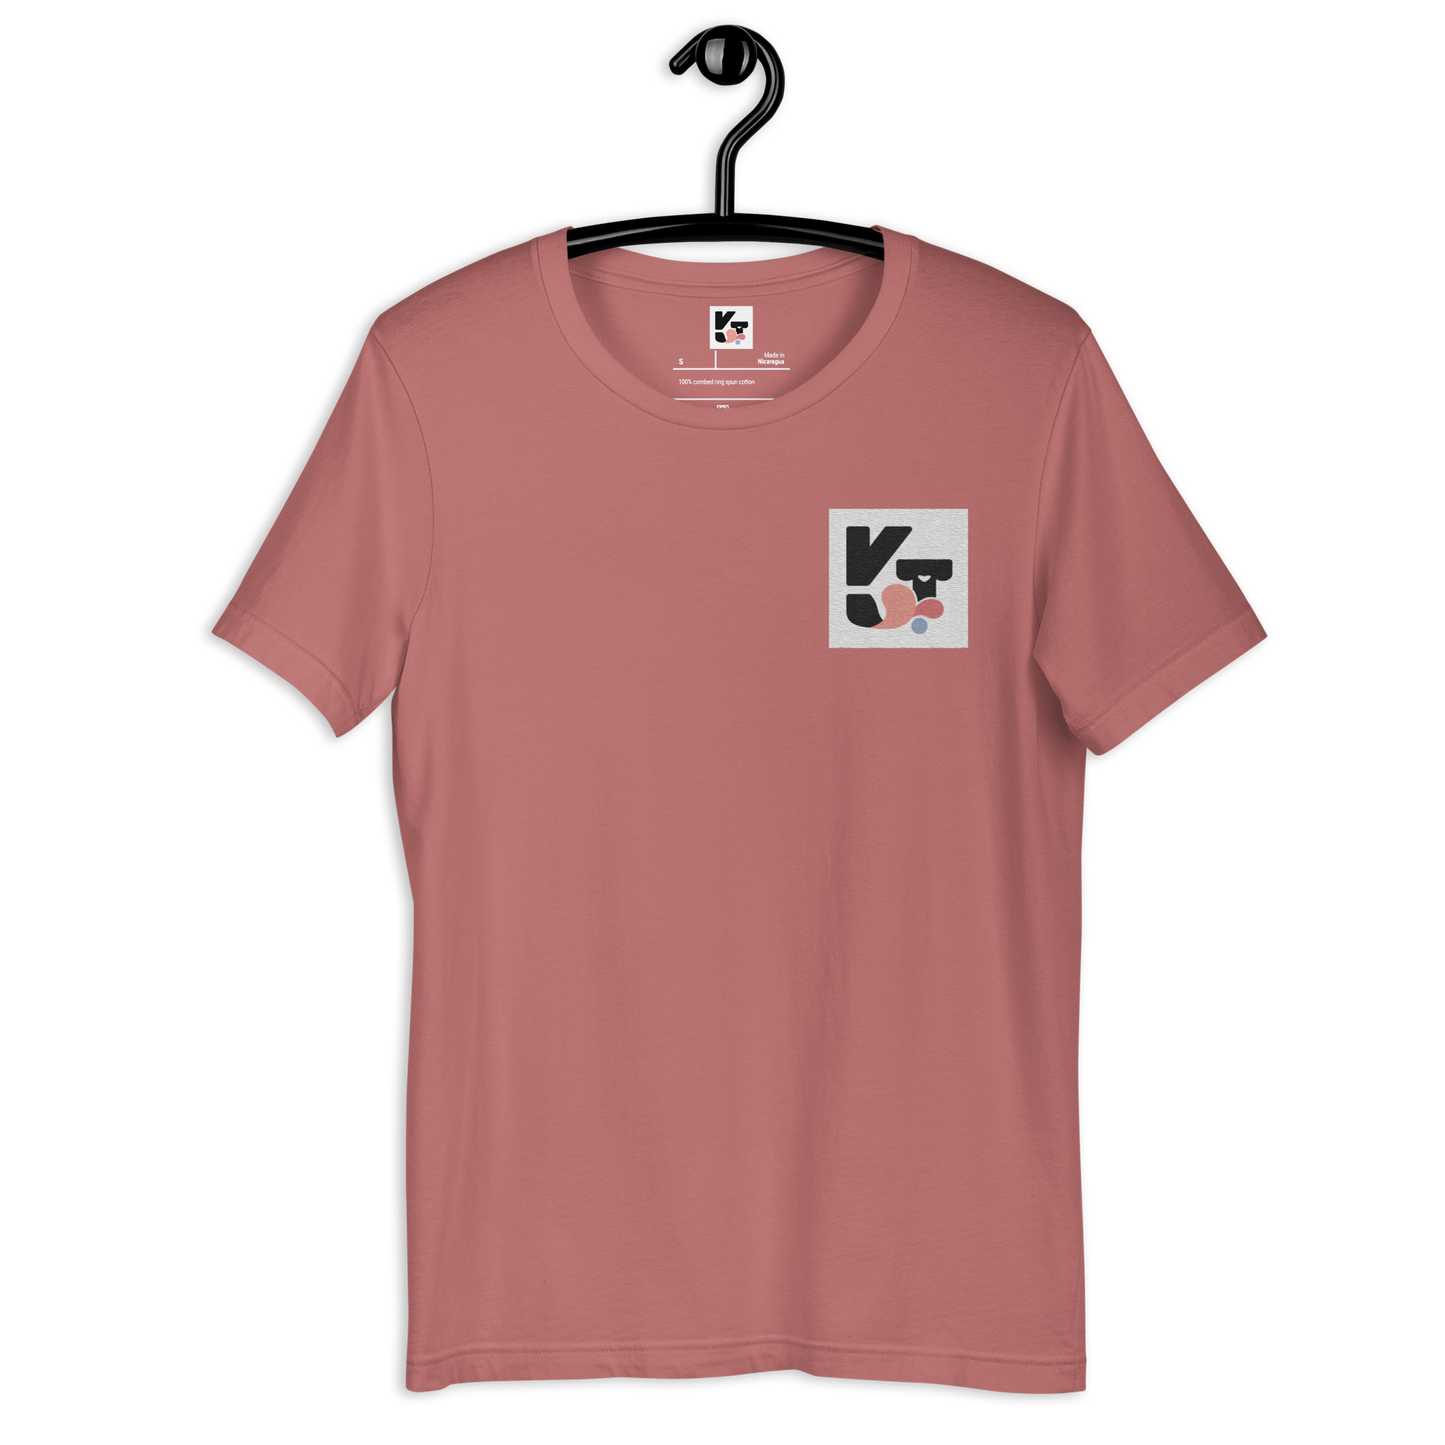 Unisex T-Shirt "Wip Wip Hurray"